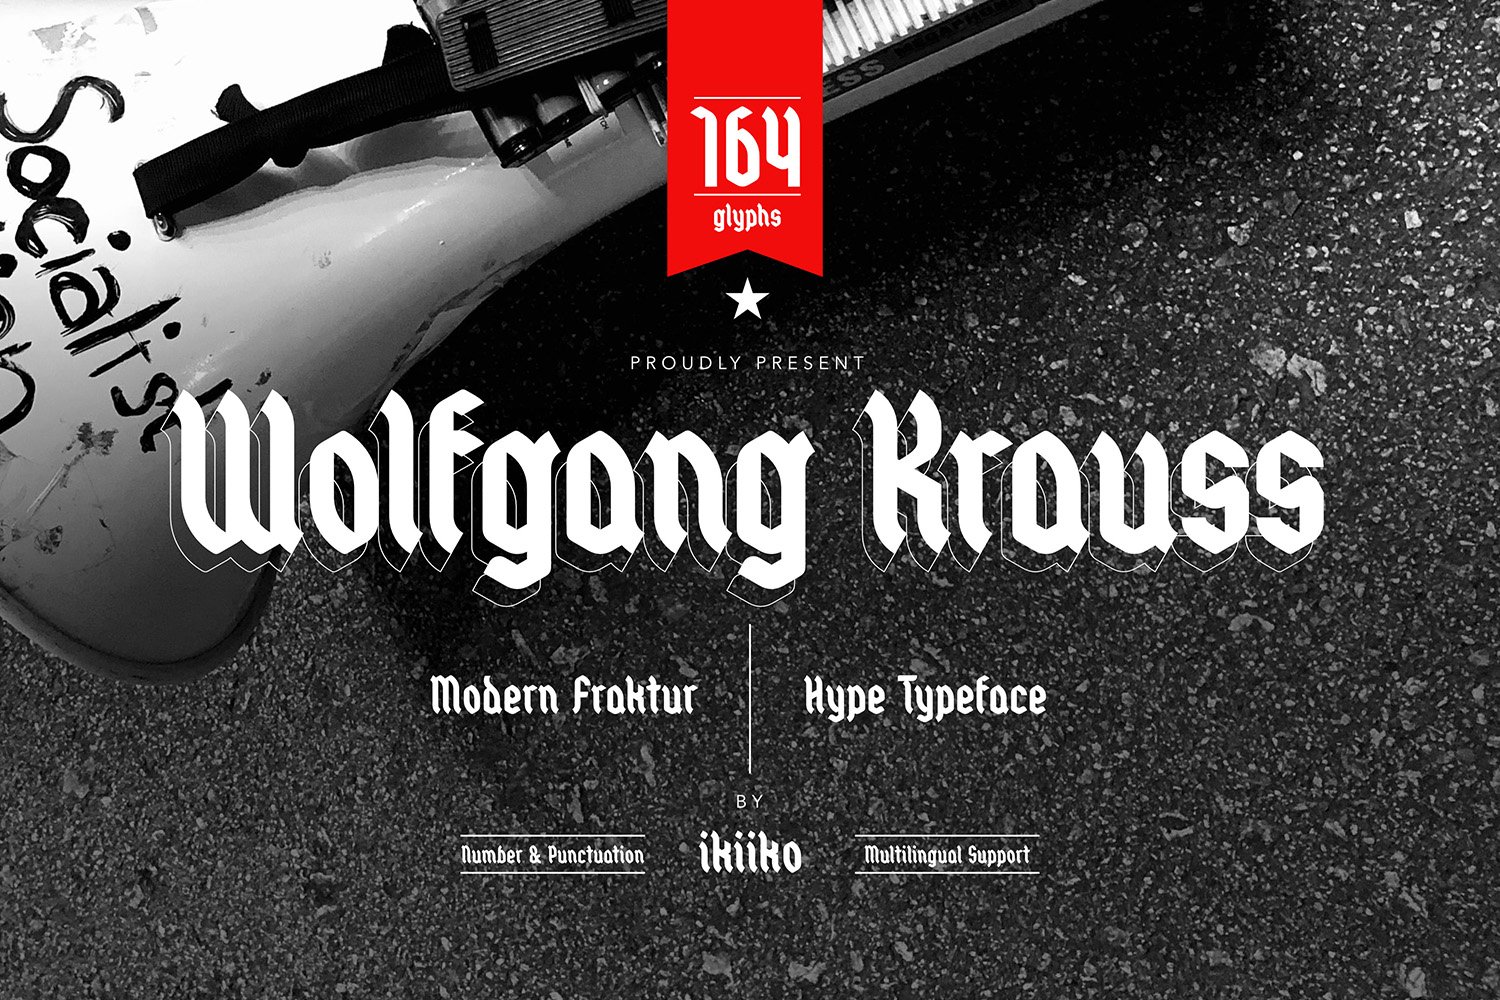 Wolfgang Krauss cover image.